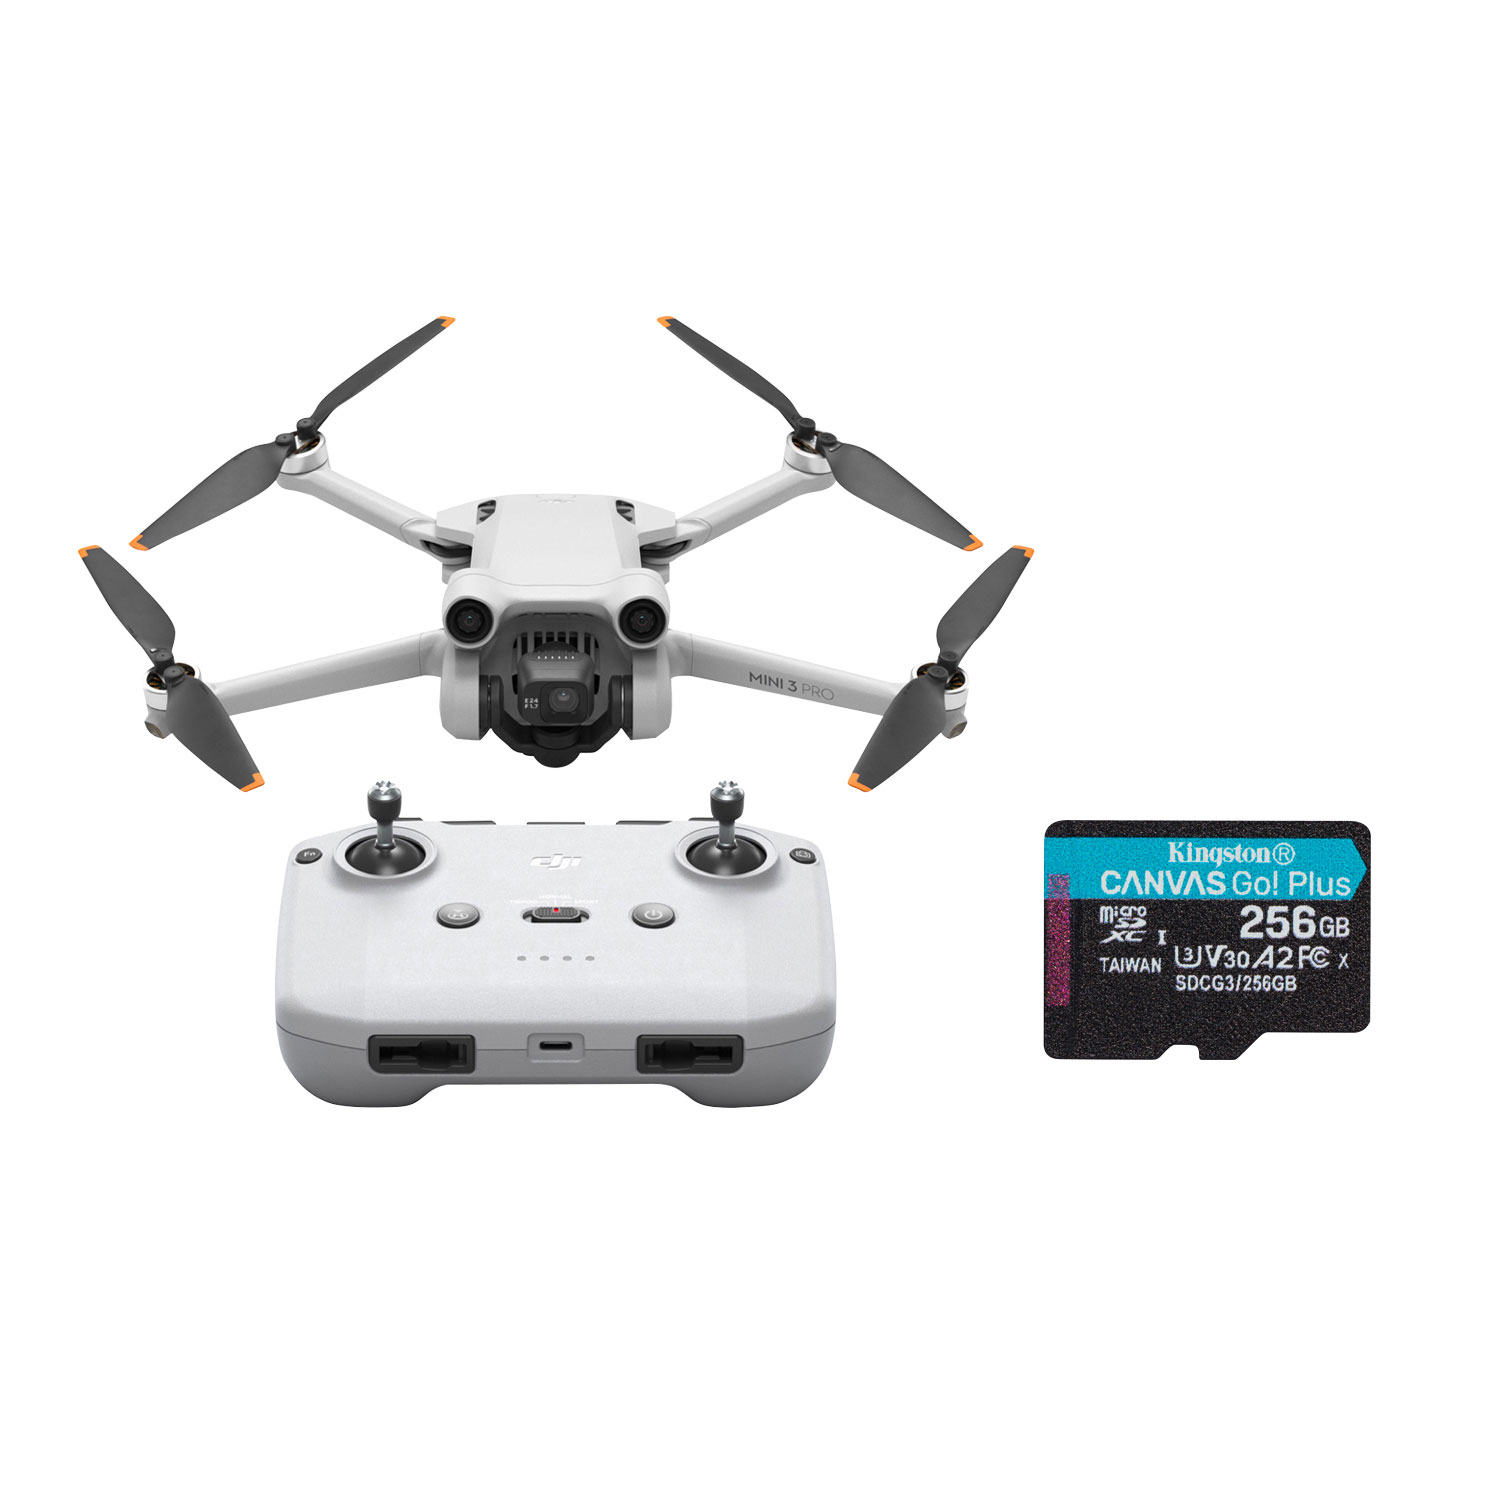 DJI Mini 3 Pro Quadcopter Drone w/ Remote Control & 256GB 170MB/s microSDXC Memory Card - Grey